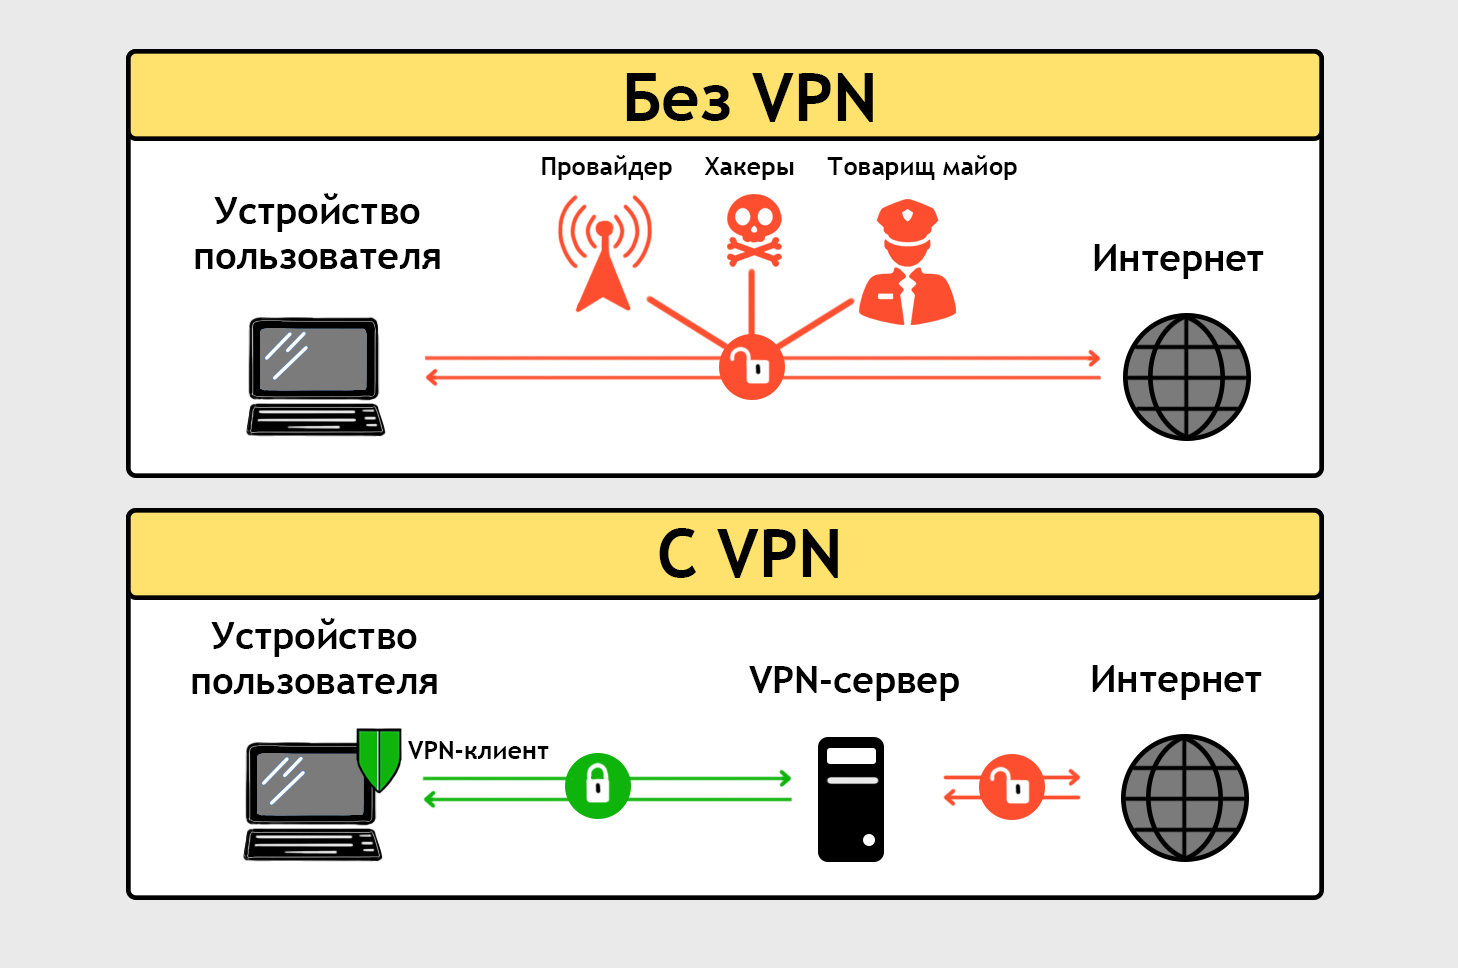 Vpn works. Виртуальные частные сети VPN. VPN (Virtual private Network — виртуальная частная сеть). VPN схема подключения. Схема работы впн.